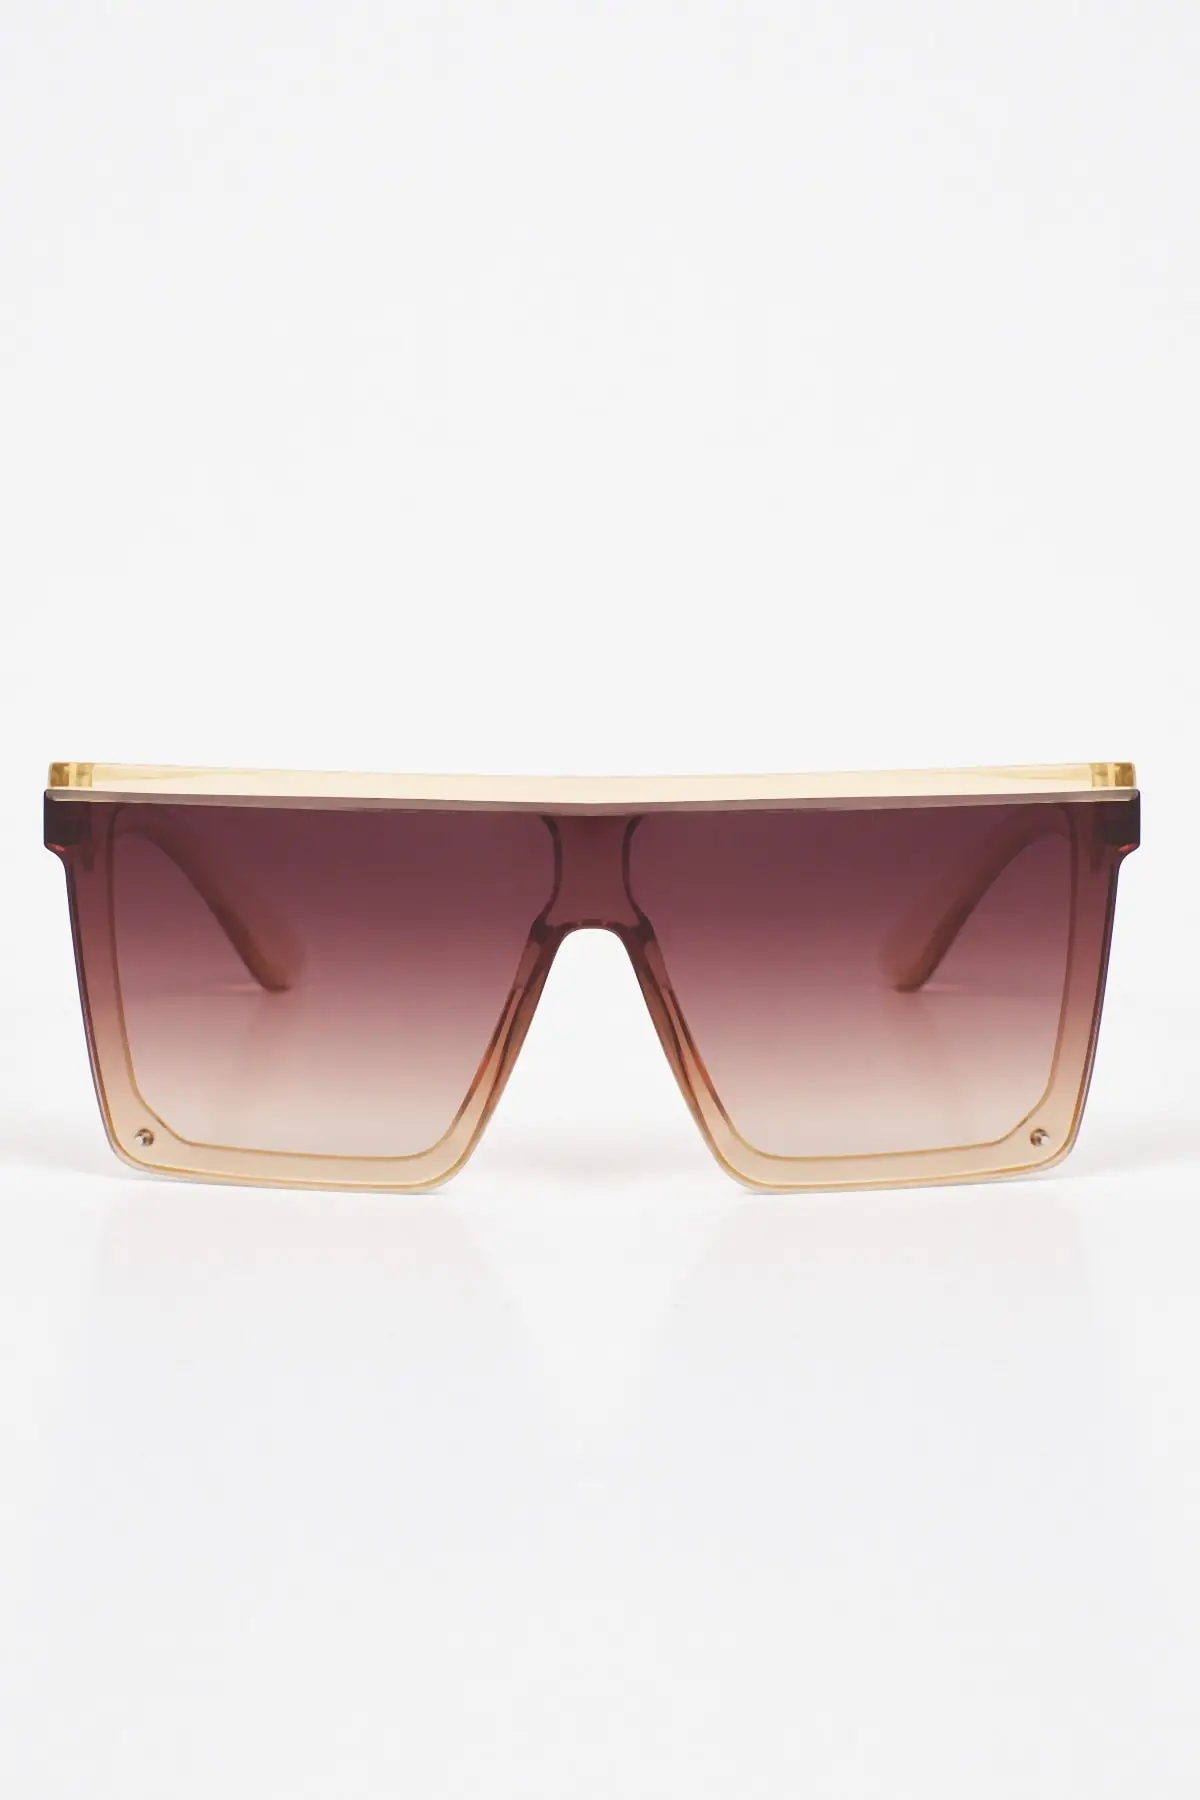 

Original quality women sunglasses sunglasses with sun glasses uv400 lights with 2 color option